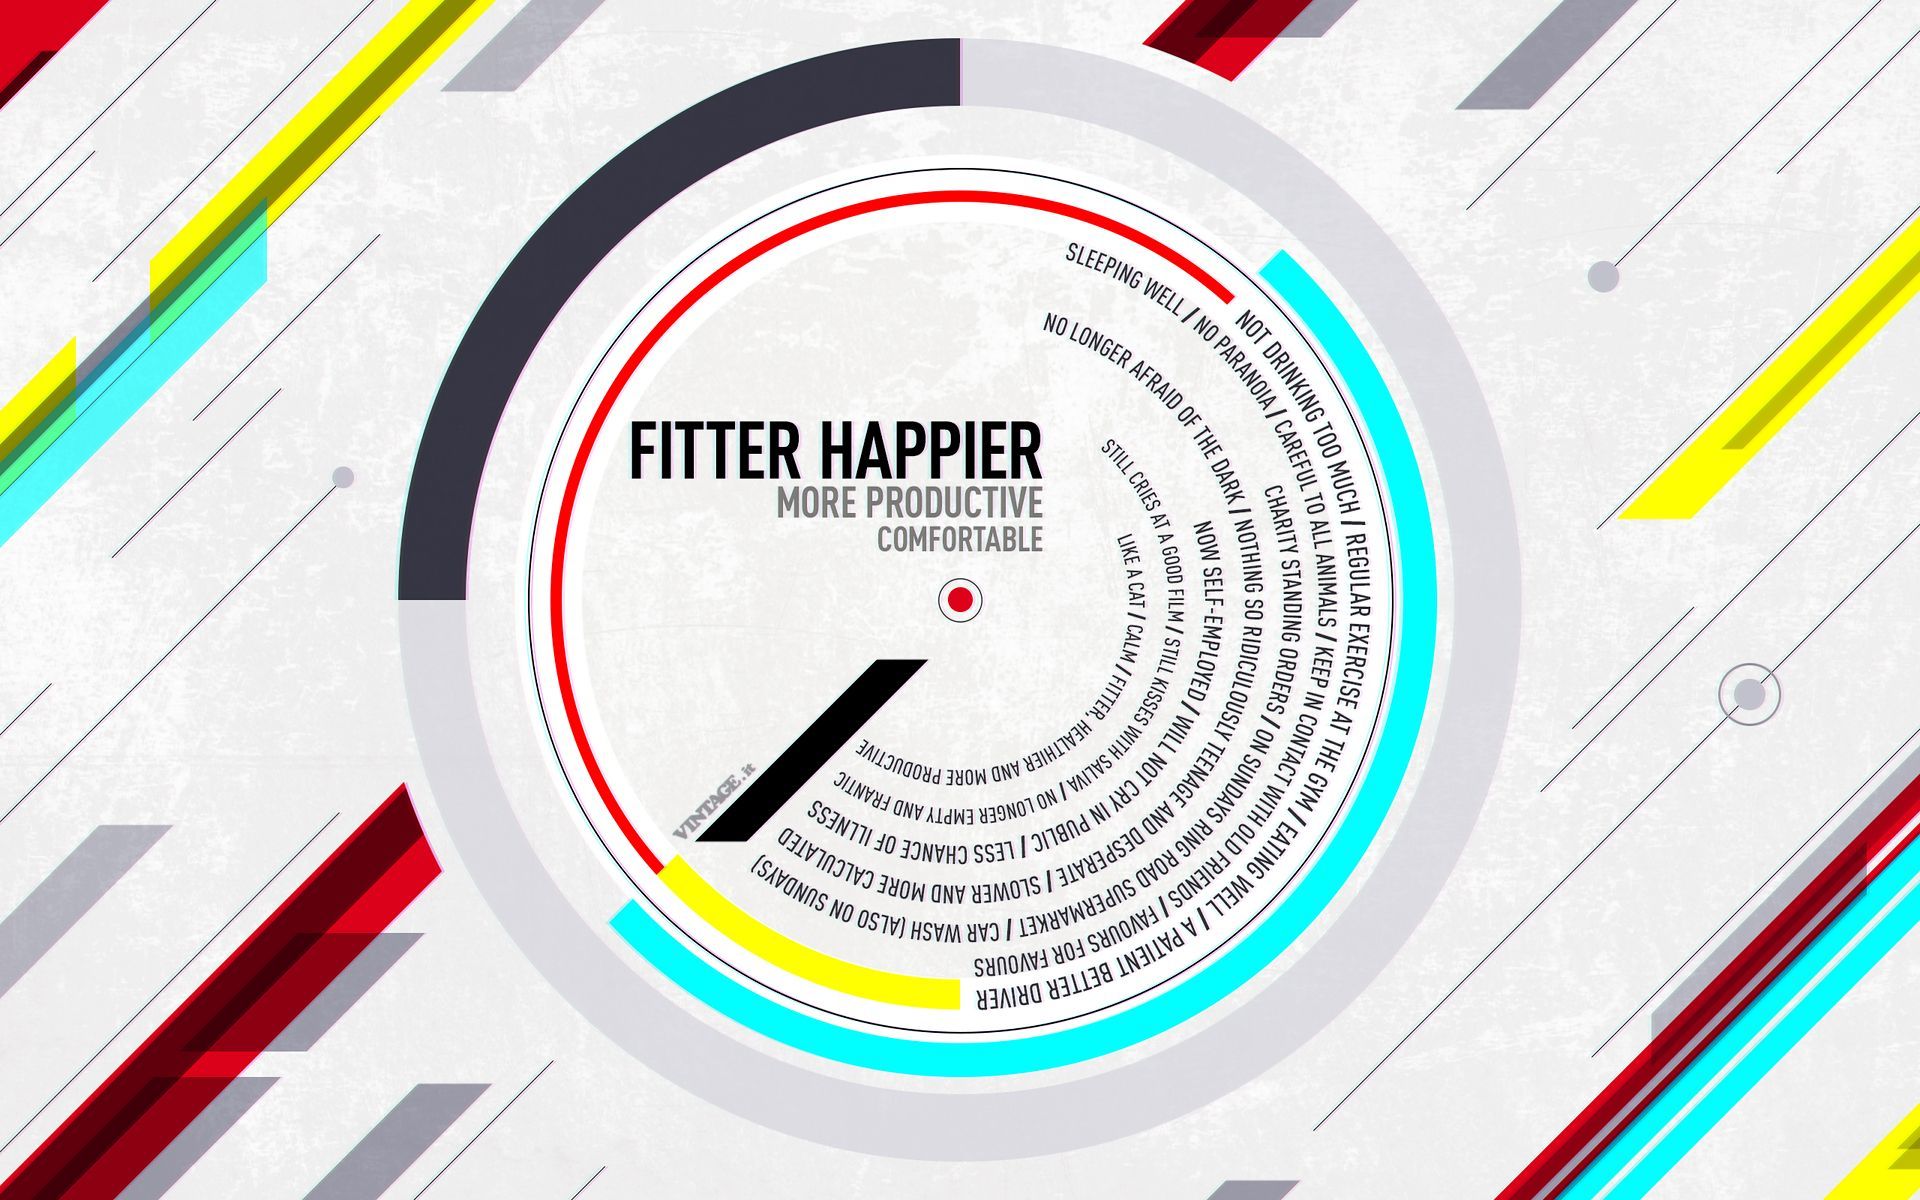 Fitter happier Radiohead wallpaper - Free Desktop HD iPad iPhone